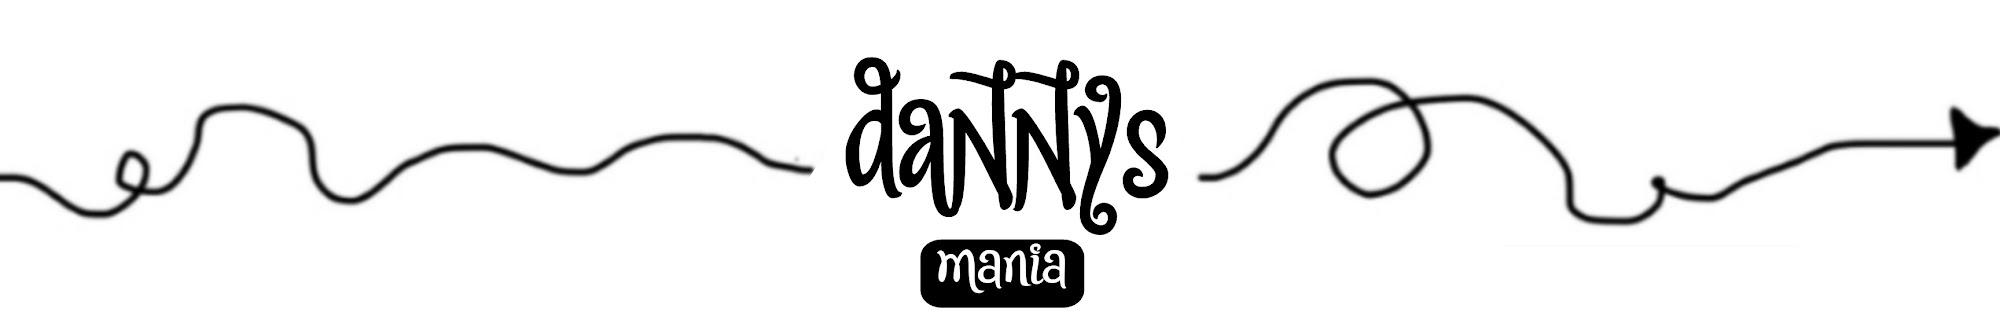 DANNY'S MANIA